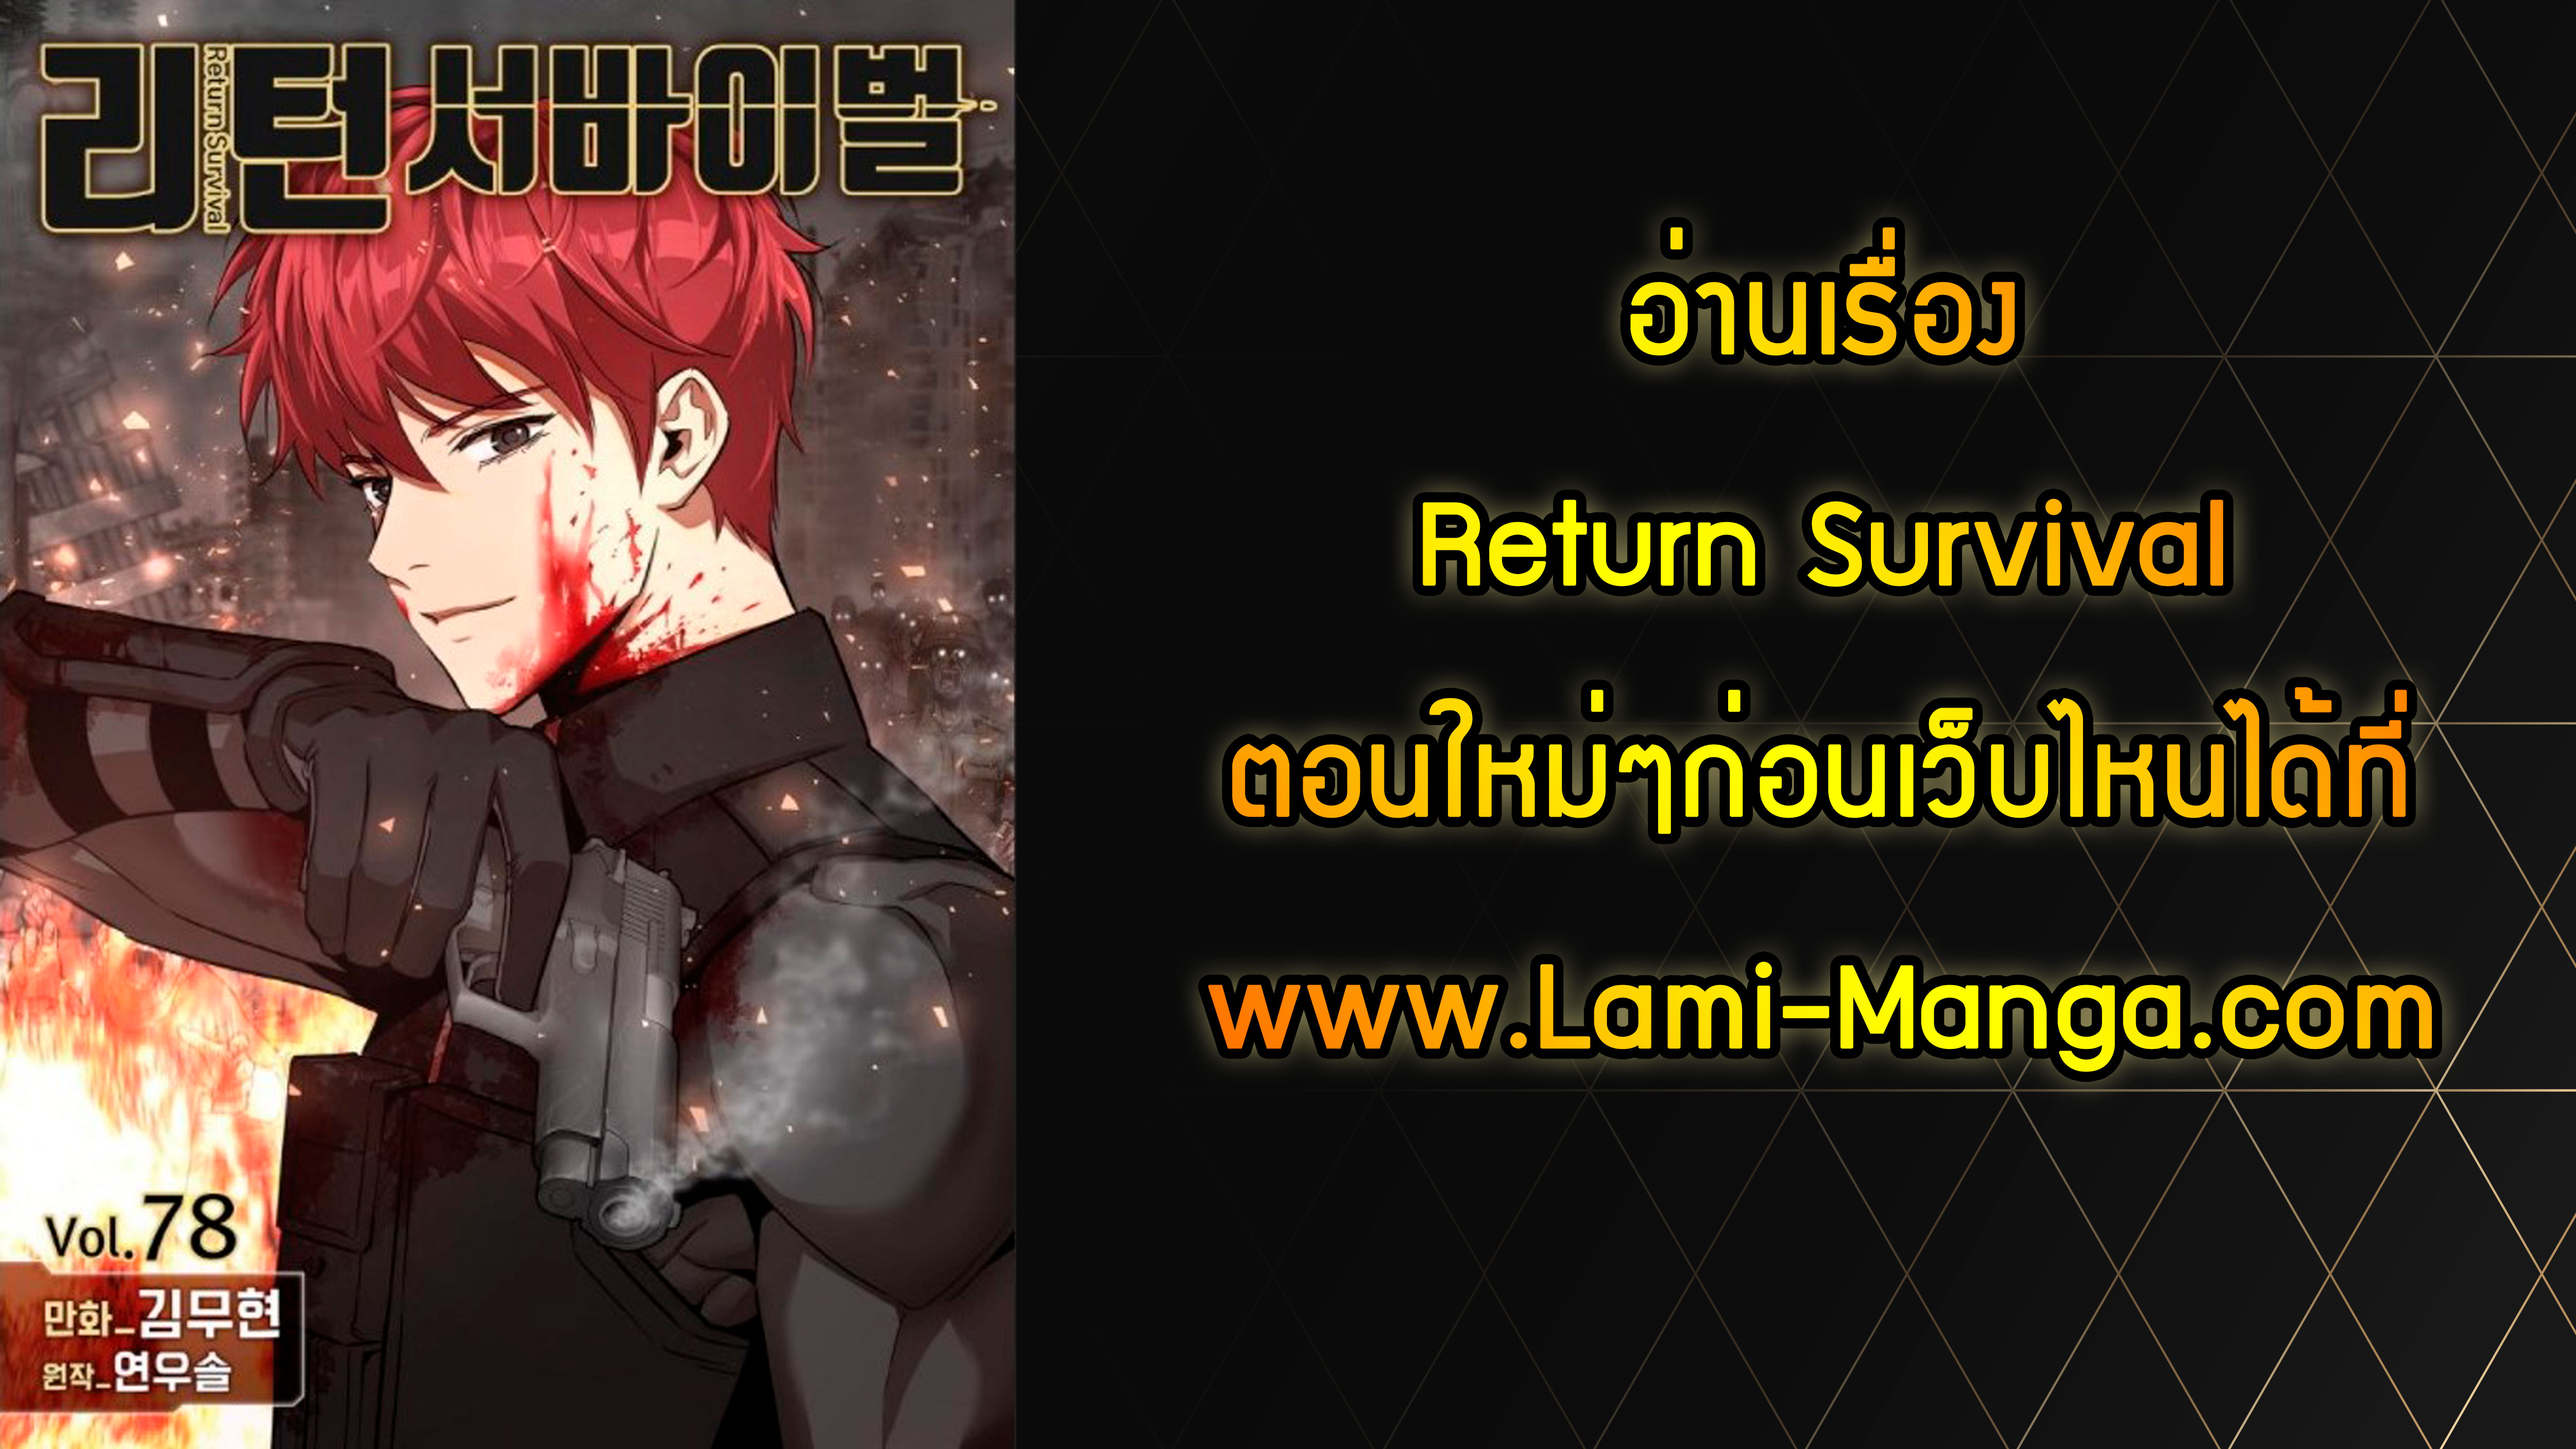 Return Survival 34 6